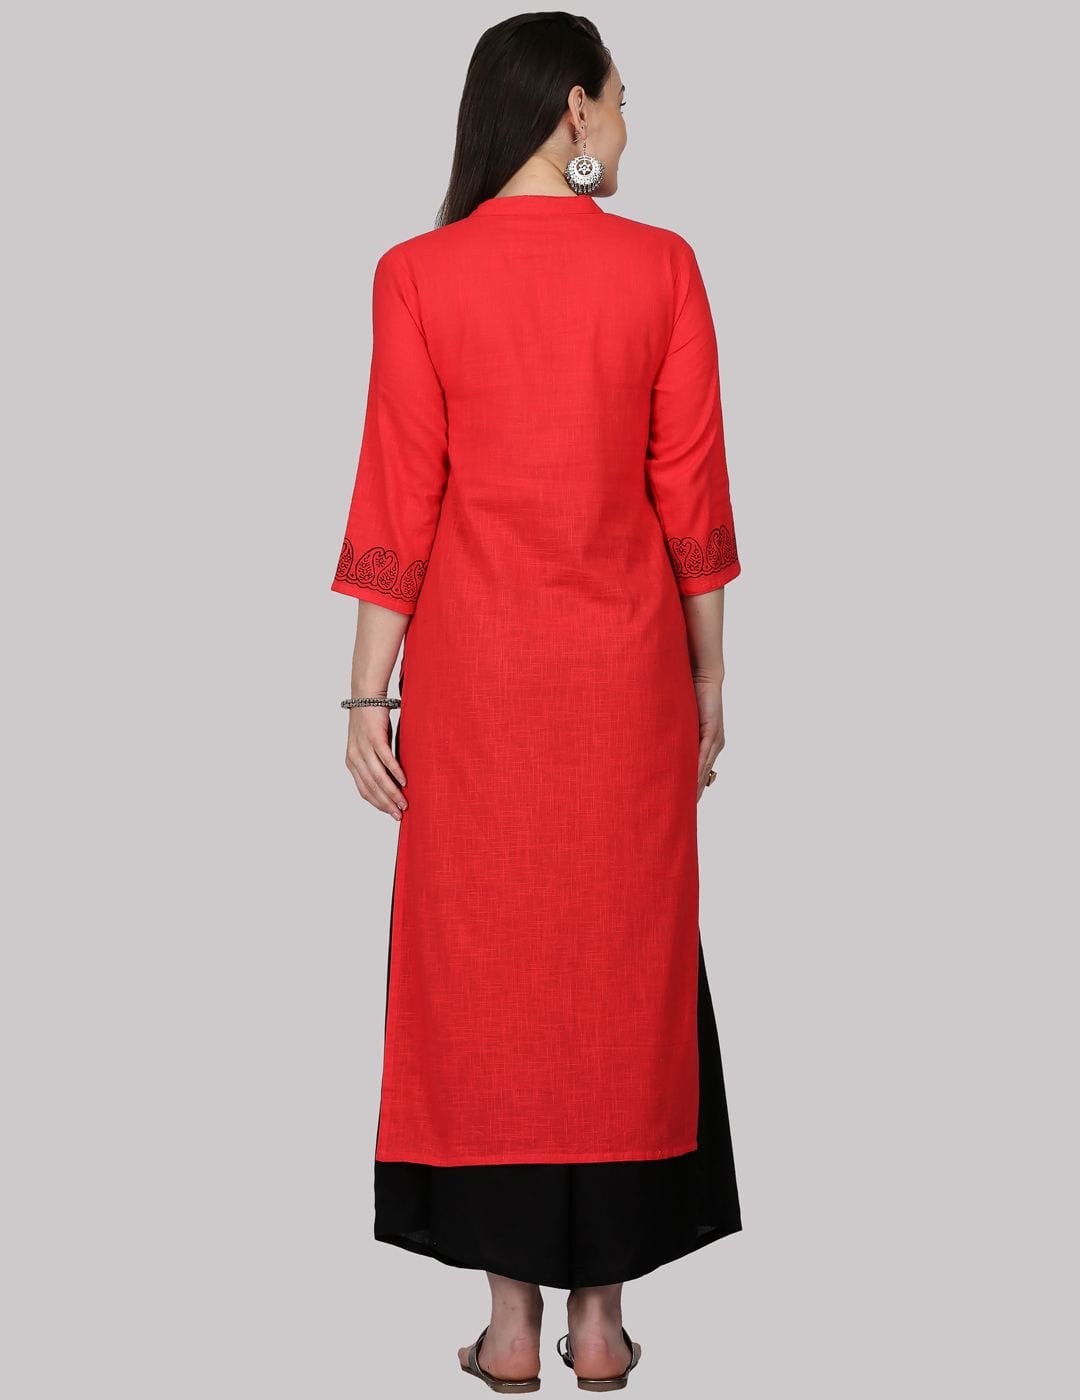 Women's KSUT Red Full Length Placket Straight Kurta with Black Block Print on Front Panel and Sleeves - Varanga